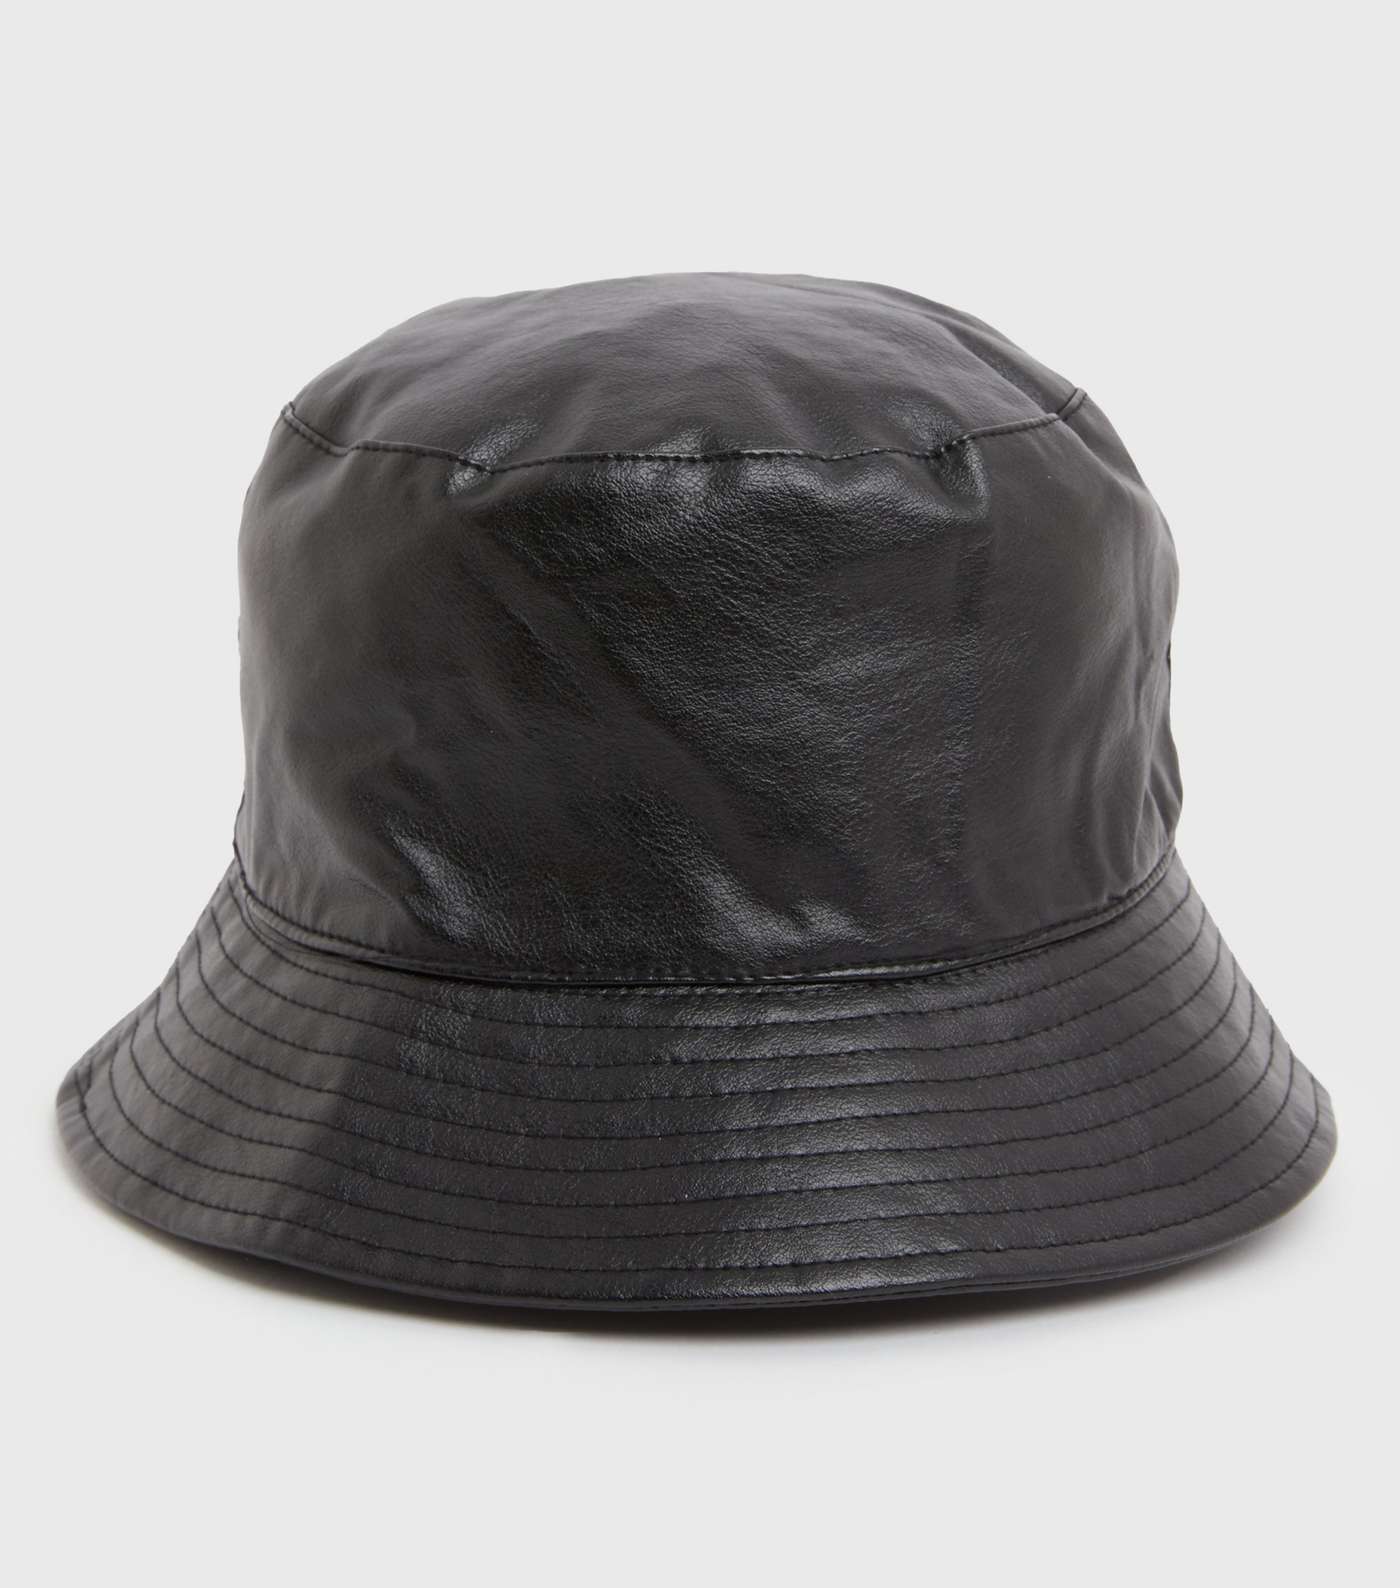 Black Leather-Look Bucket Hat Image 2